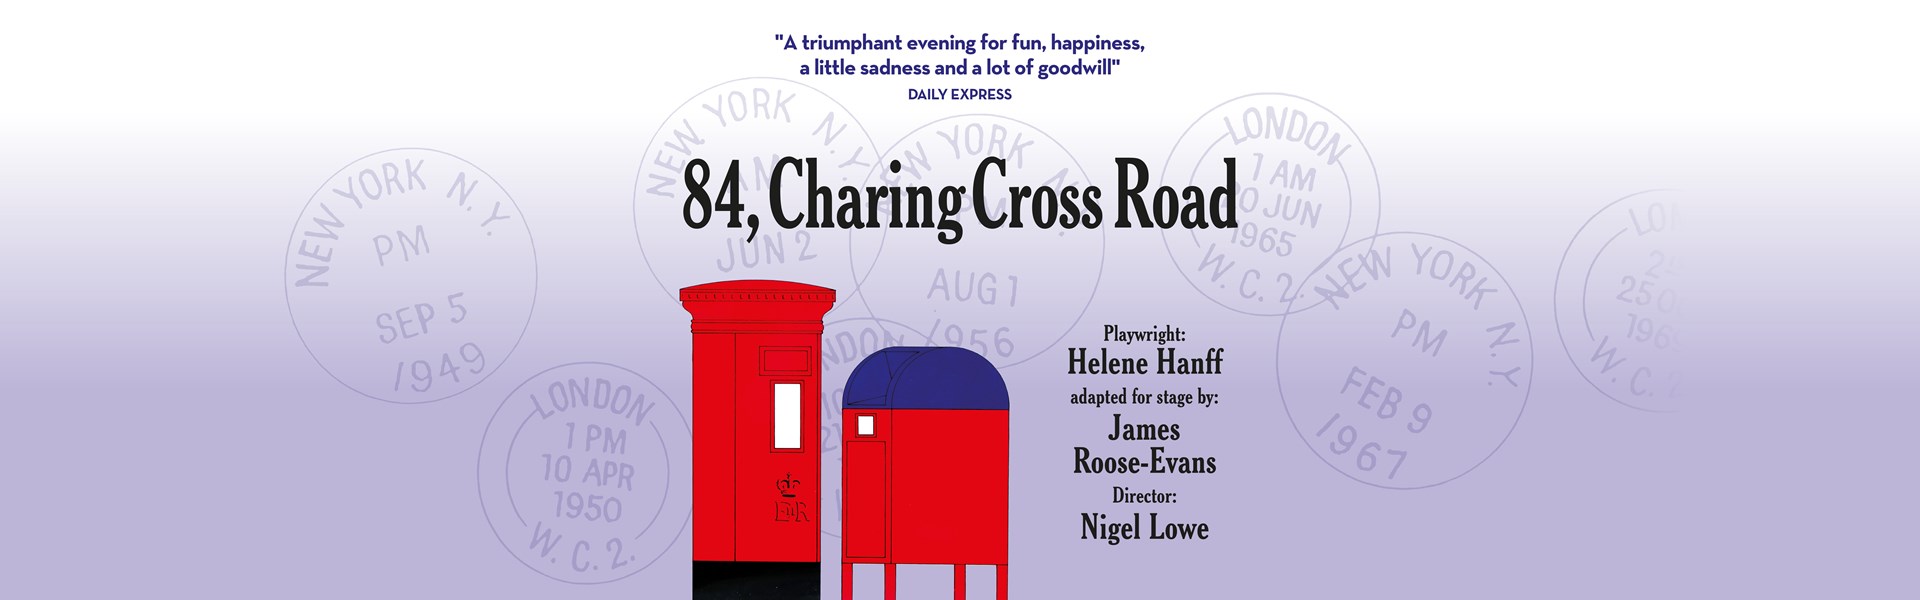 84 Charing Cross Road - Lichfield Players